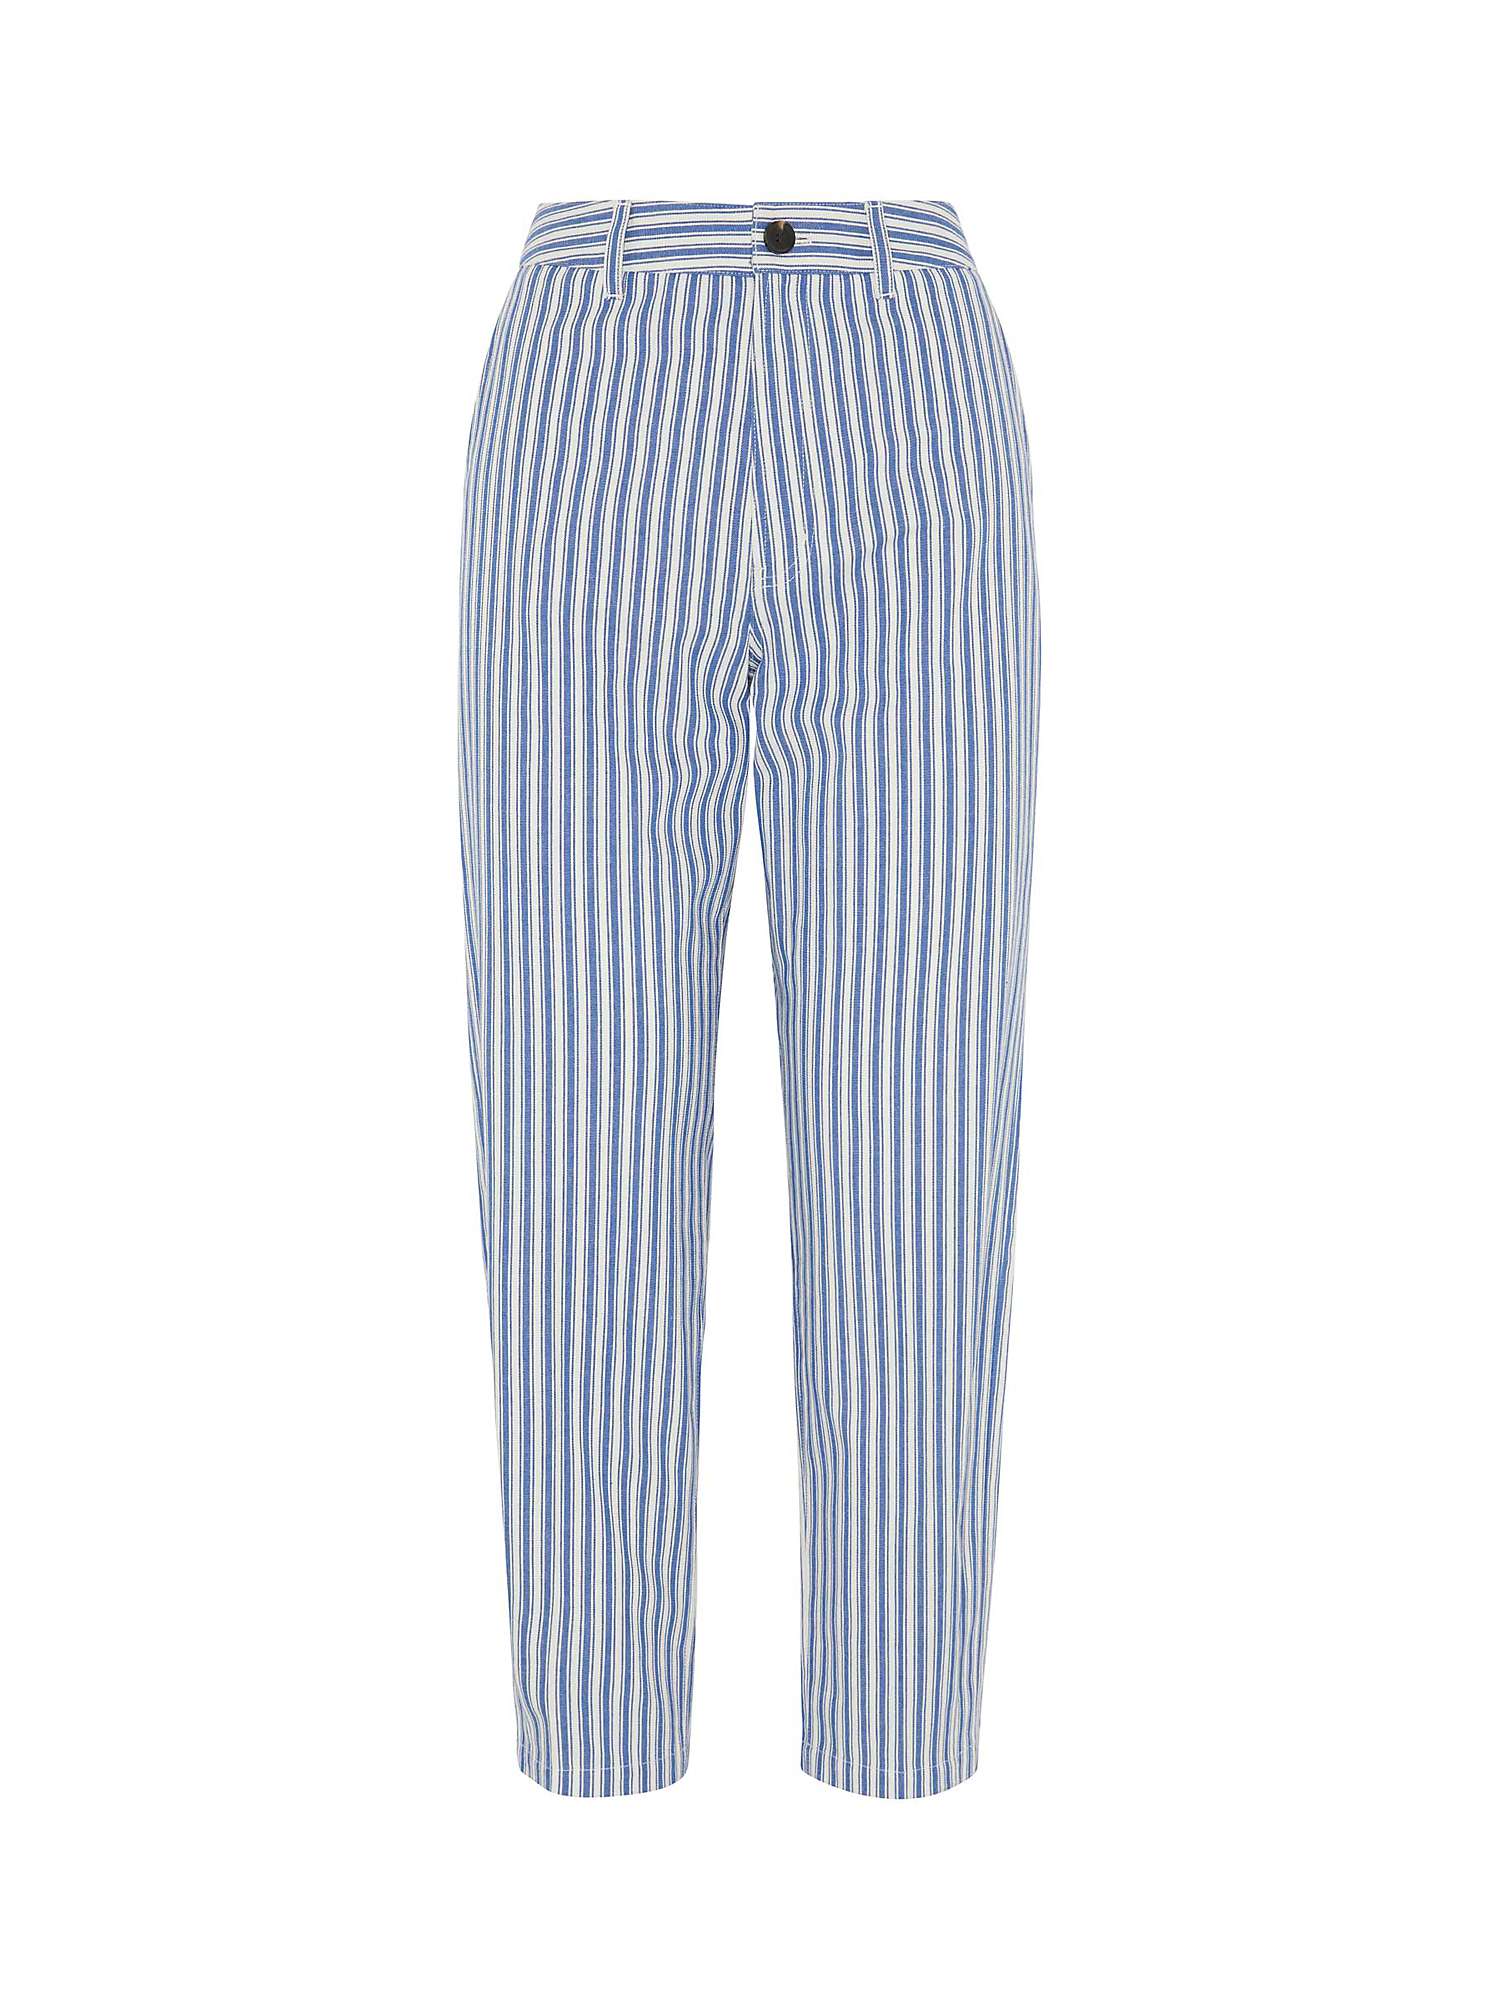 Buy Vivere By Savannah Miller Joseph Stripe Tapered Trousers, Indigo/White Online at johnlewis.com